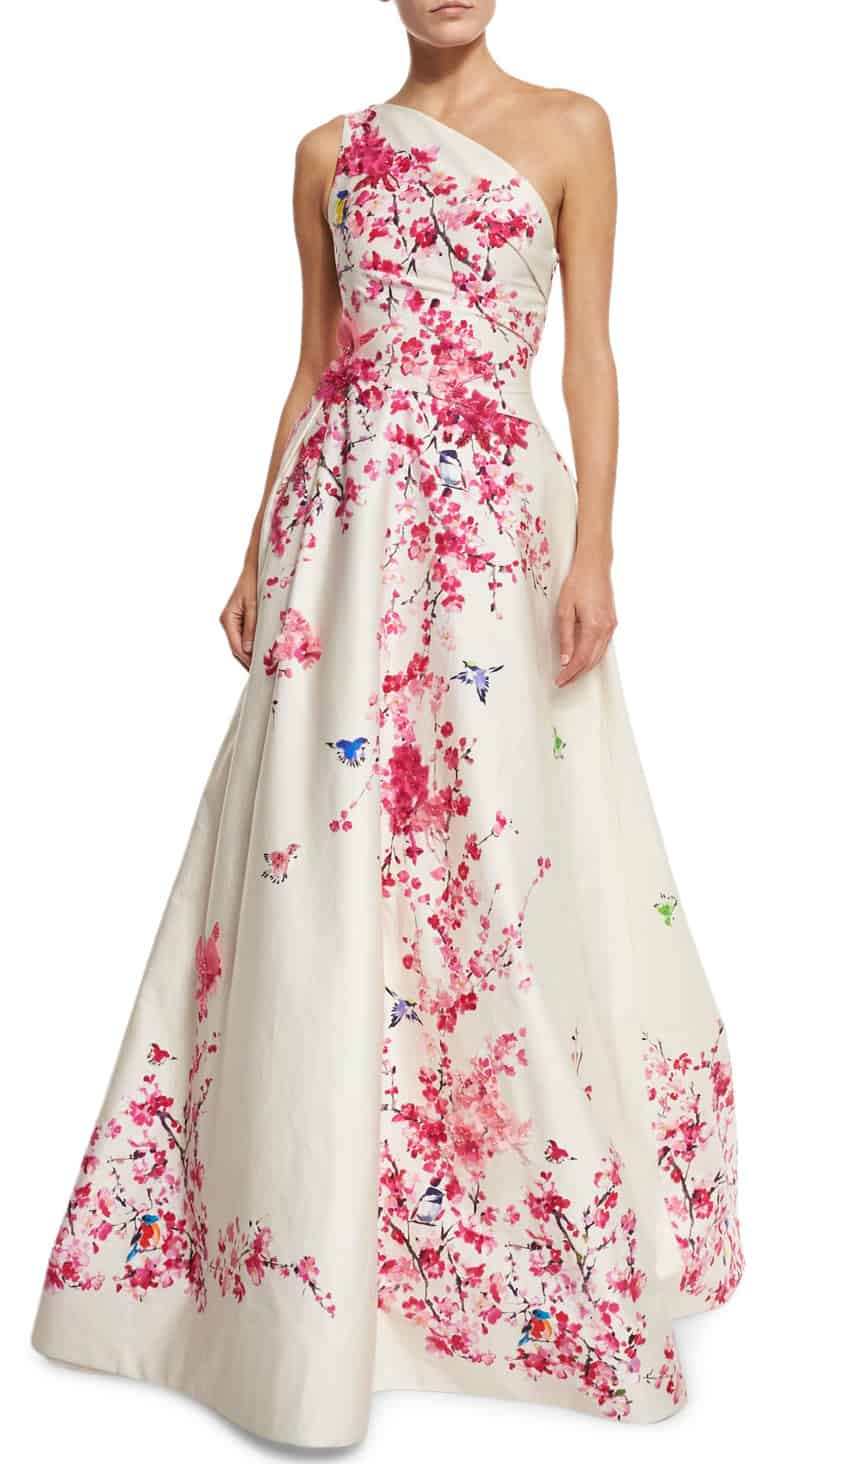 Cherry Blossom Wedding Ideas and Inspiration - Dress for the Wedding